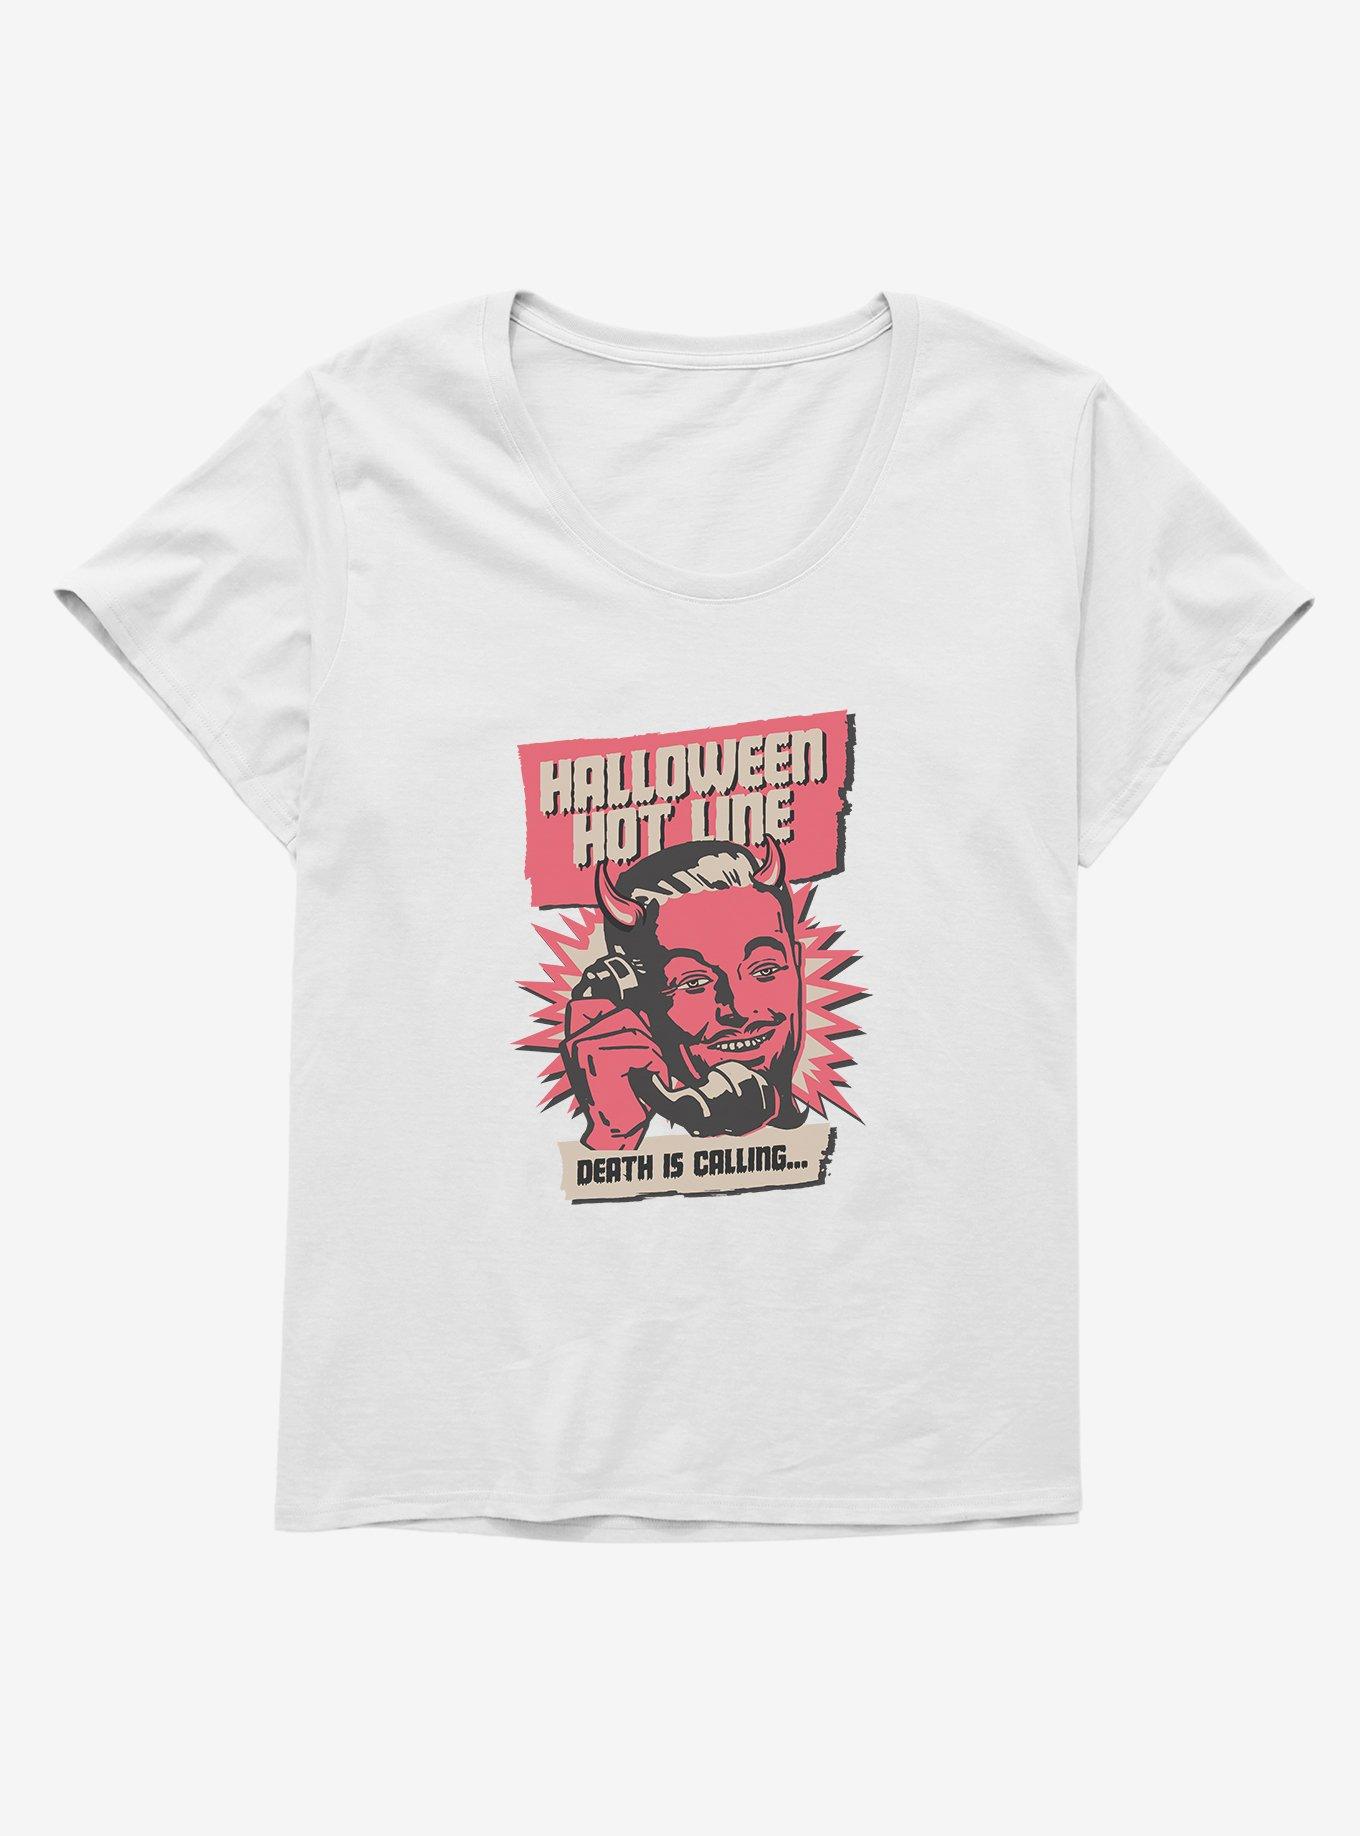 Halloween Halloween Hot Line Girls Plus Size T-Shirt, WHITE, hi-res